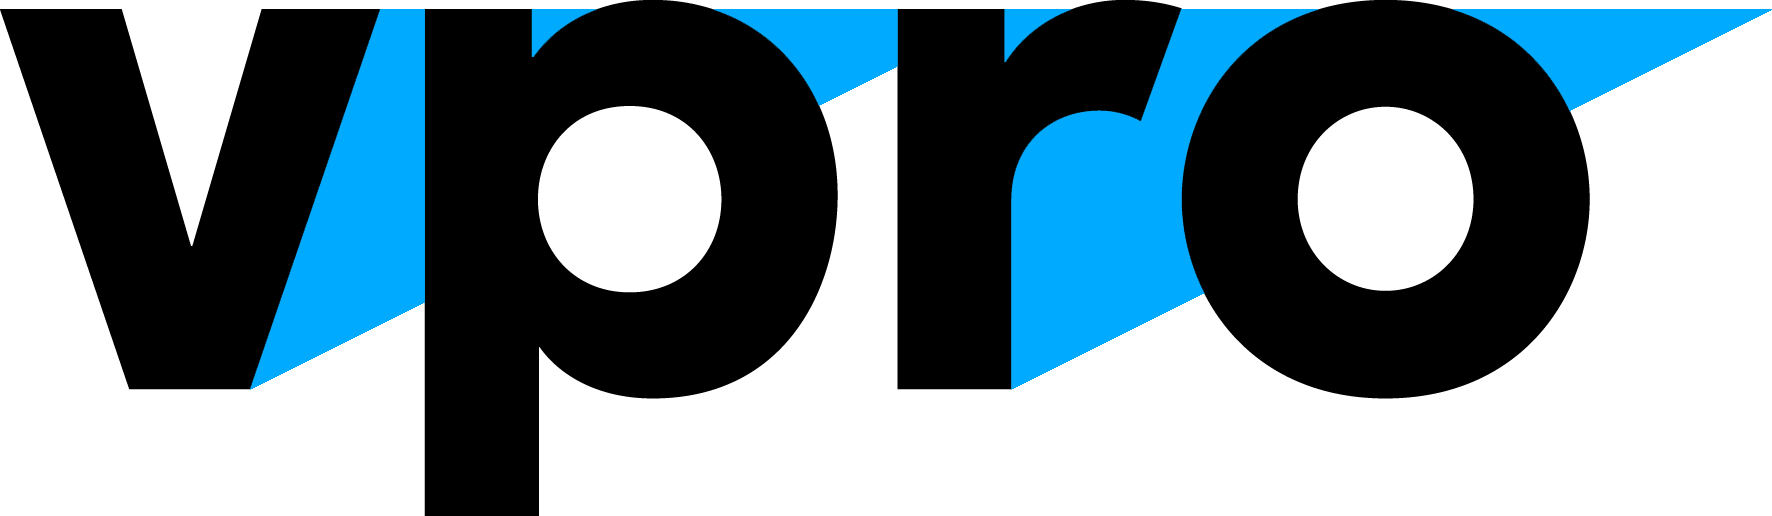 VPRO logo.png